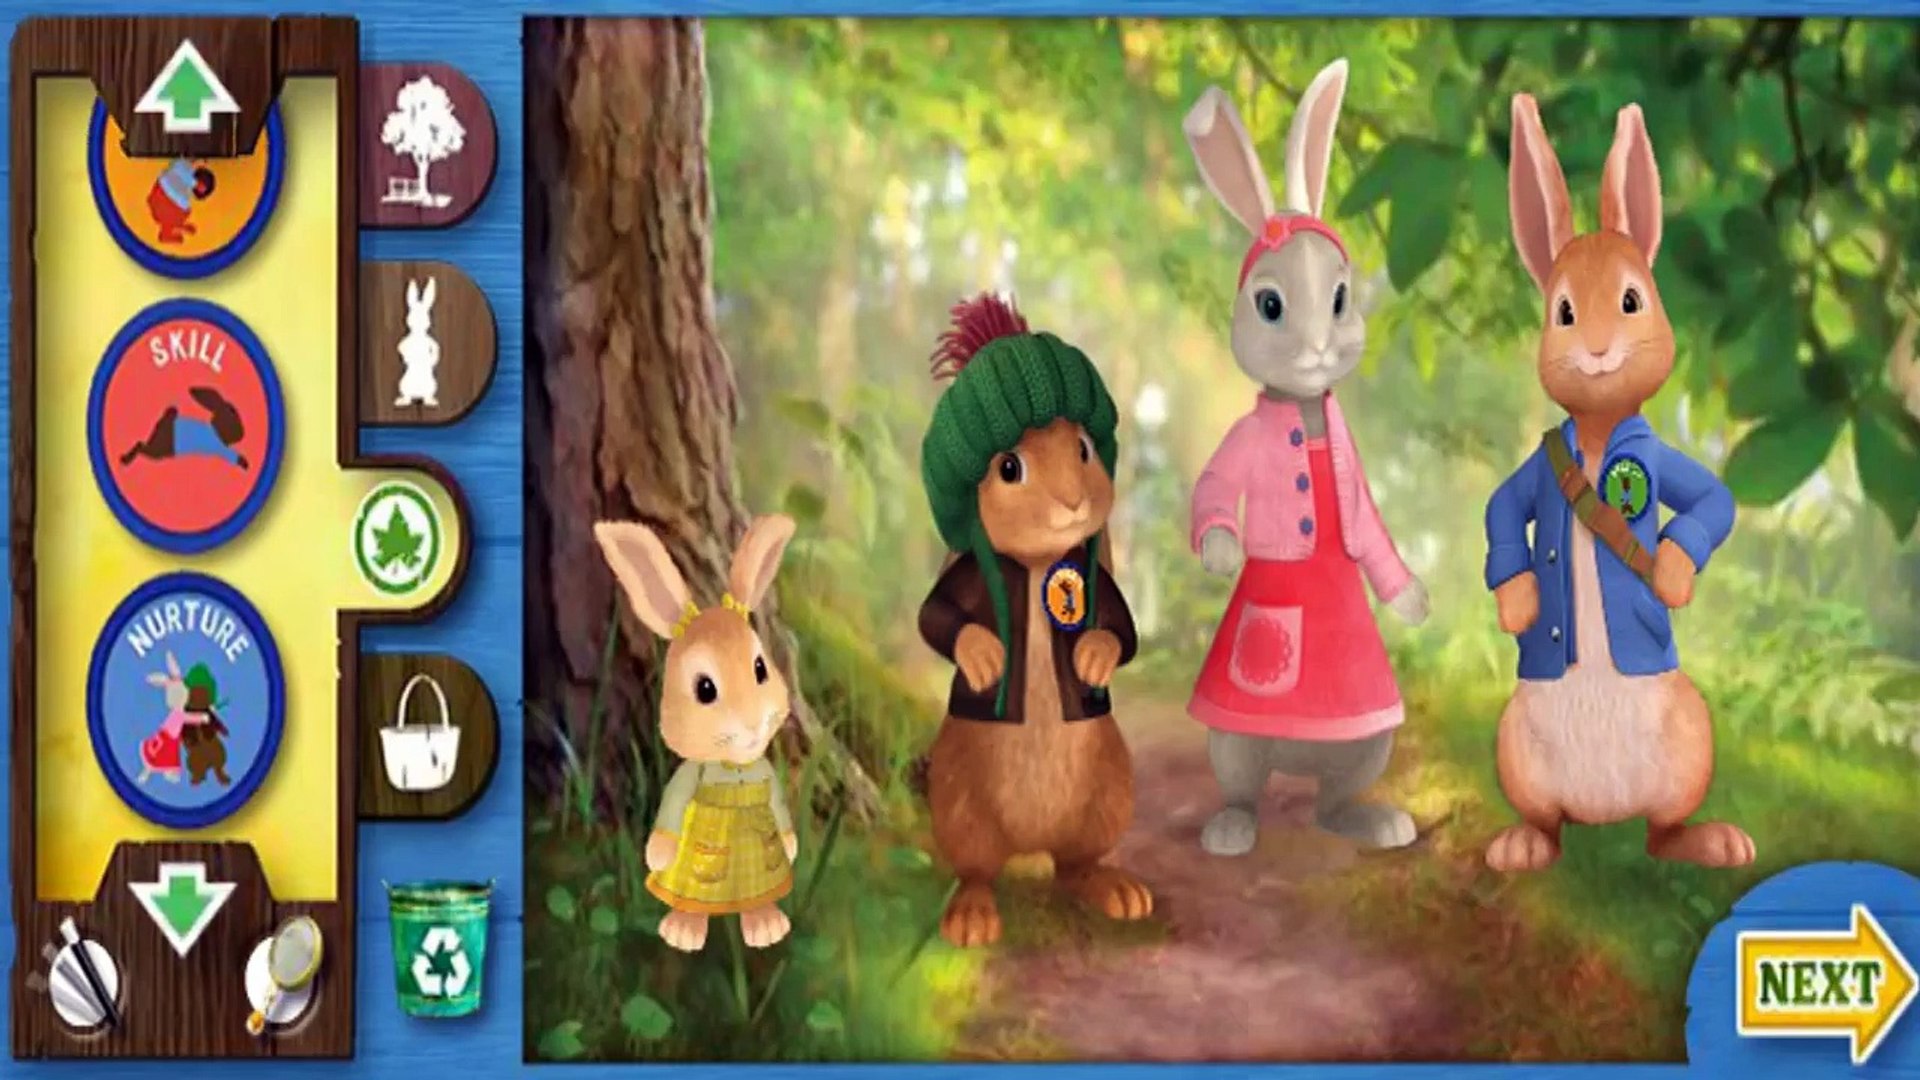 Peter Rabbit - Make a Scene (Peter Rabbit Games) Full Episode HD -  Dailymotion Video